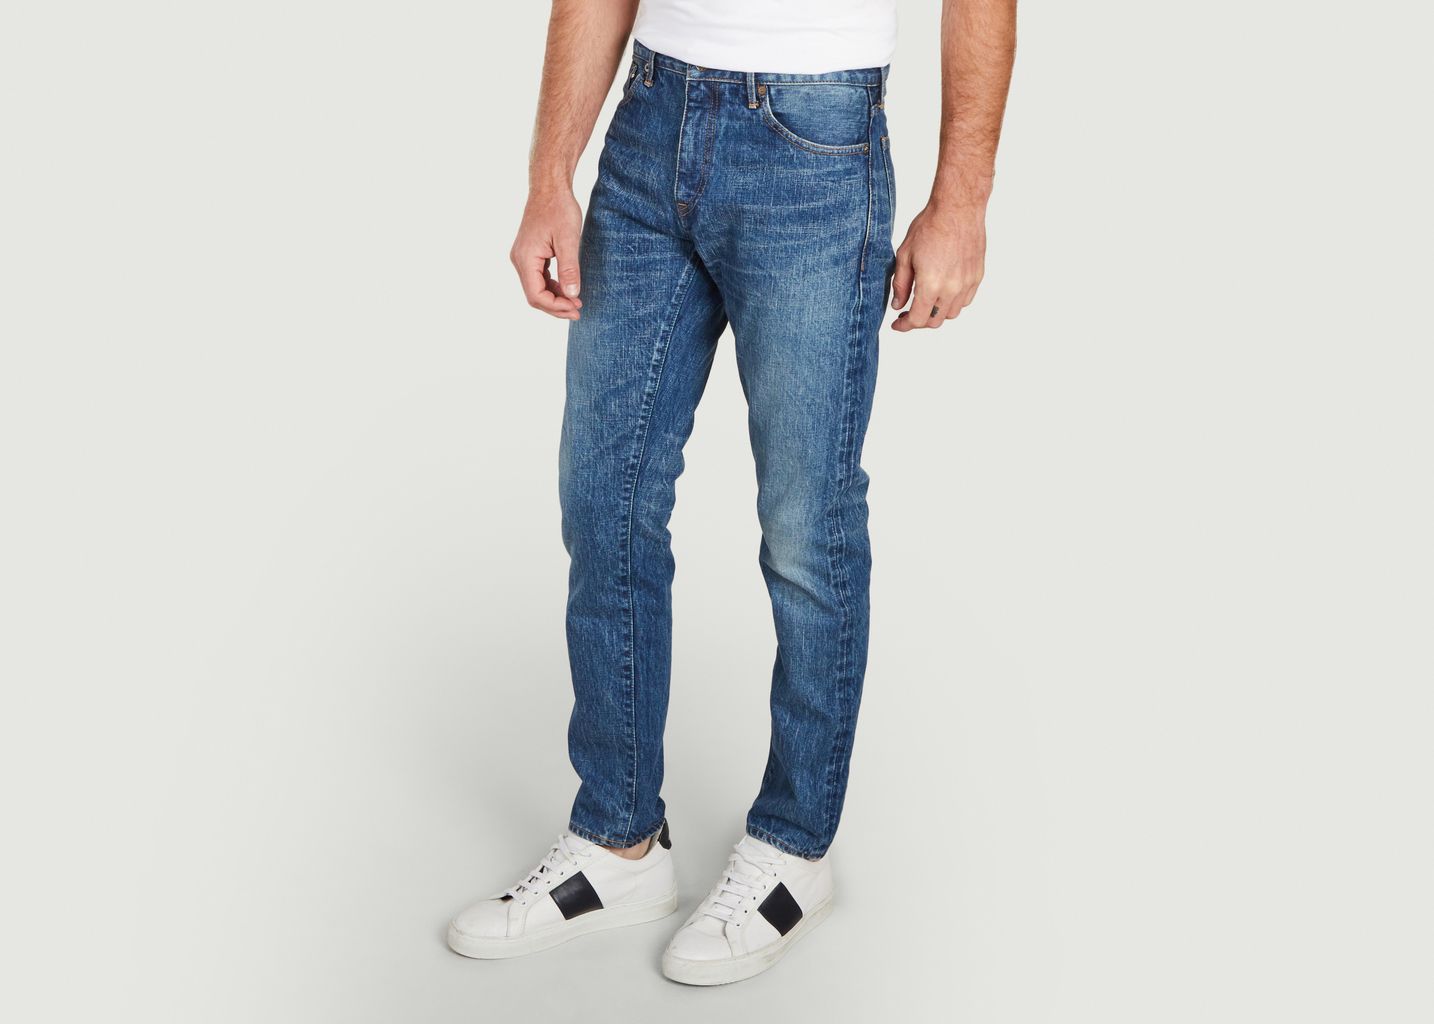 Circle straight cut jeans - Japan Blue Jeans